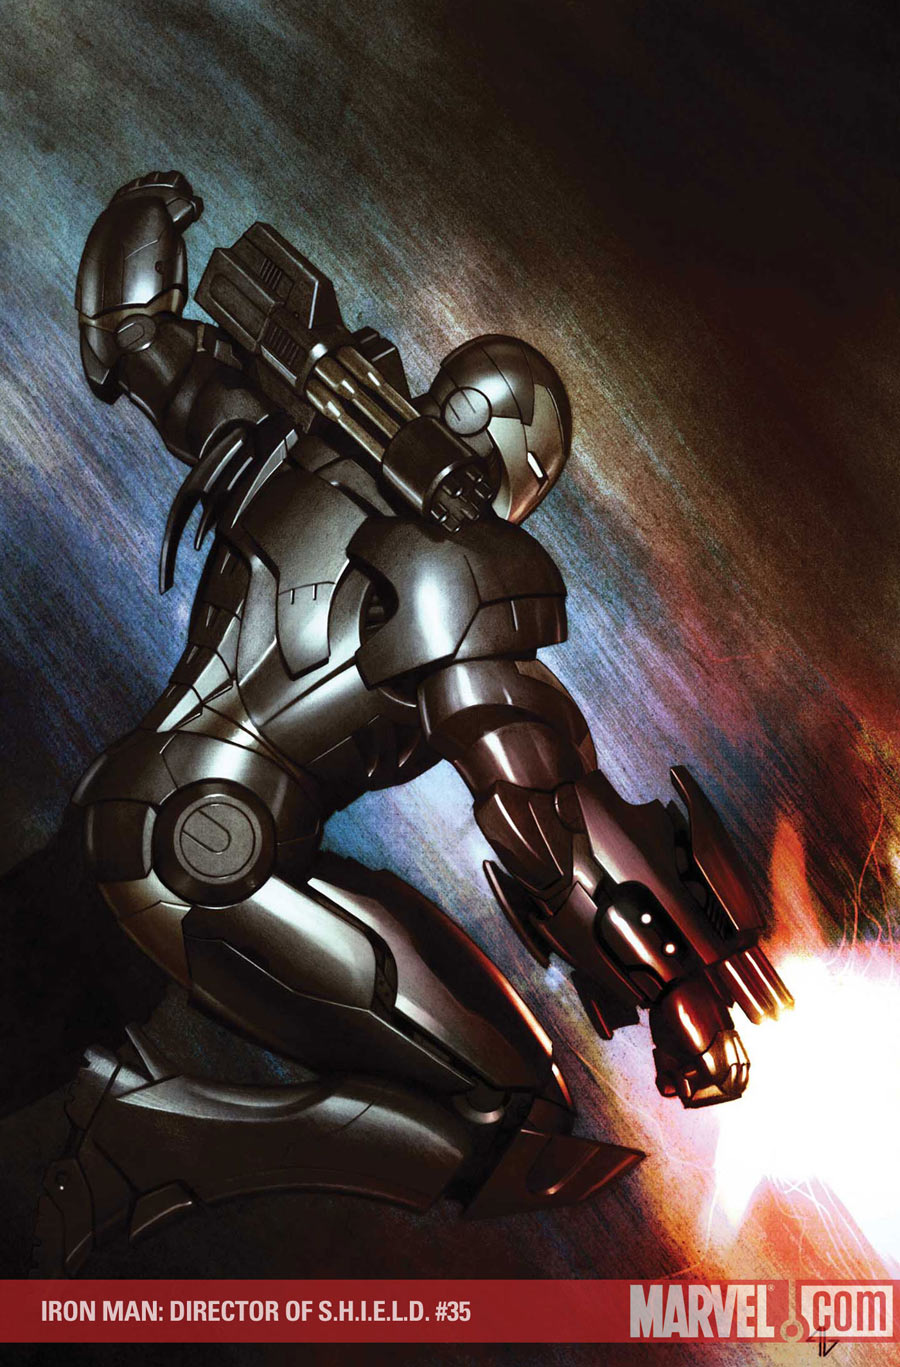 WAR MACHINE: WEAPON OF S.H.I.E.L.D. #35